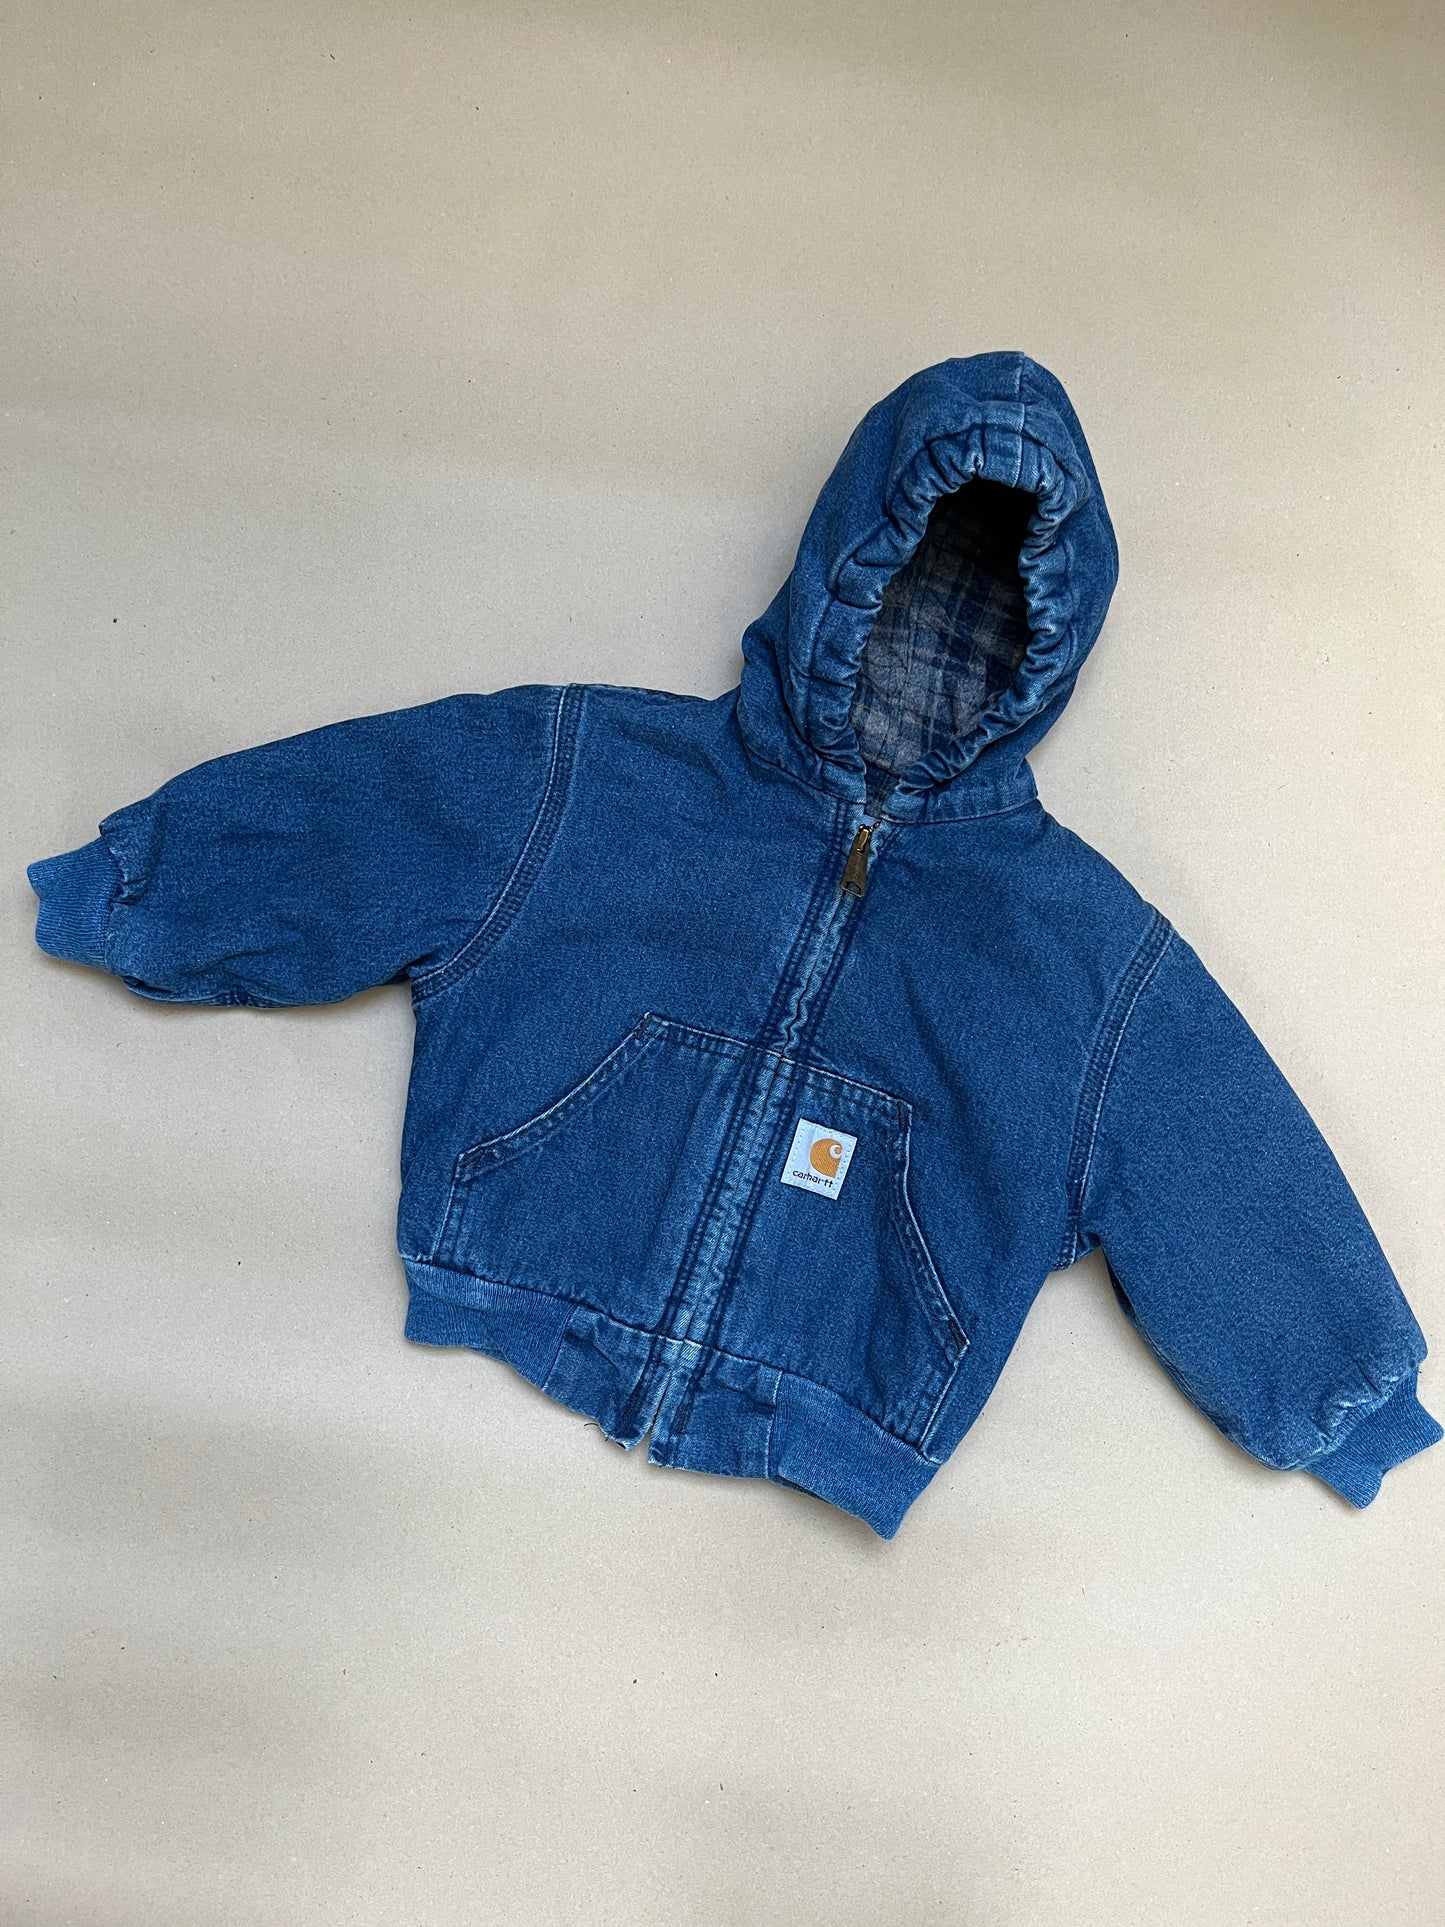 Hooded denim jacket, 92